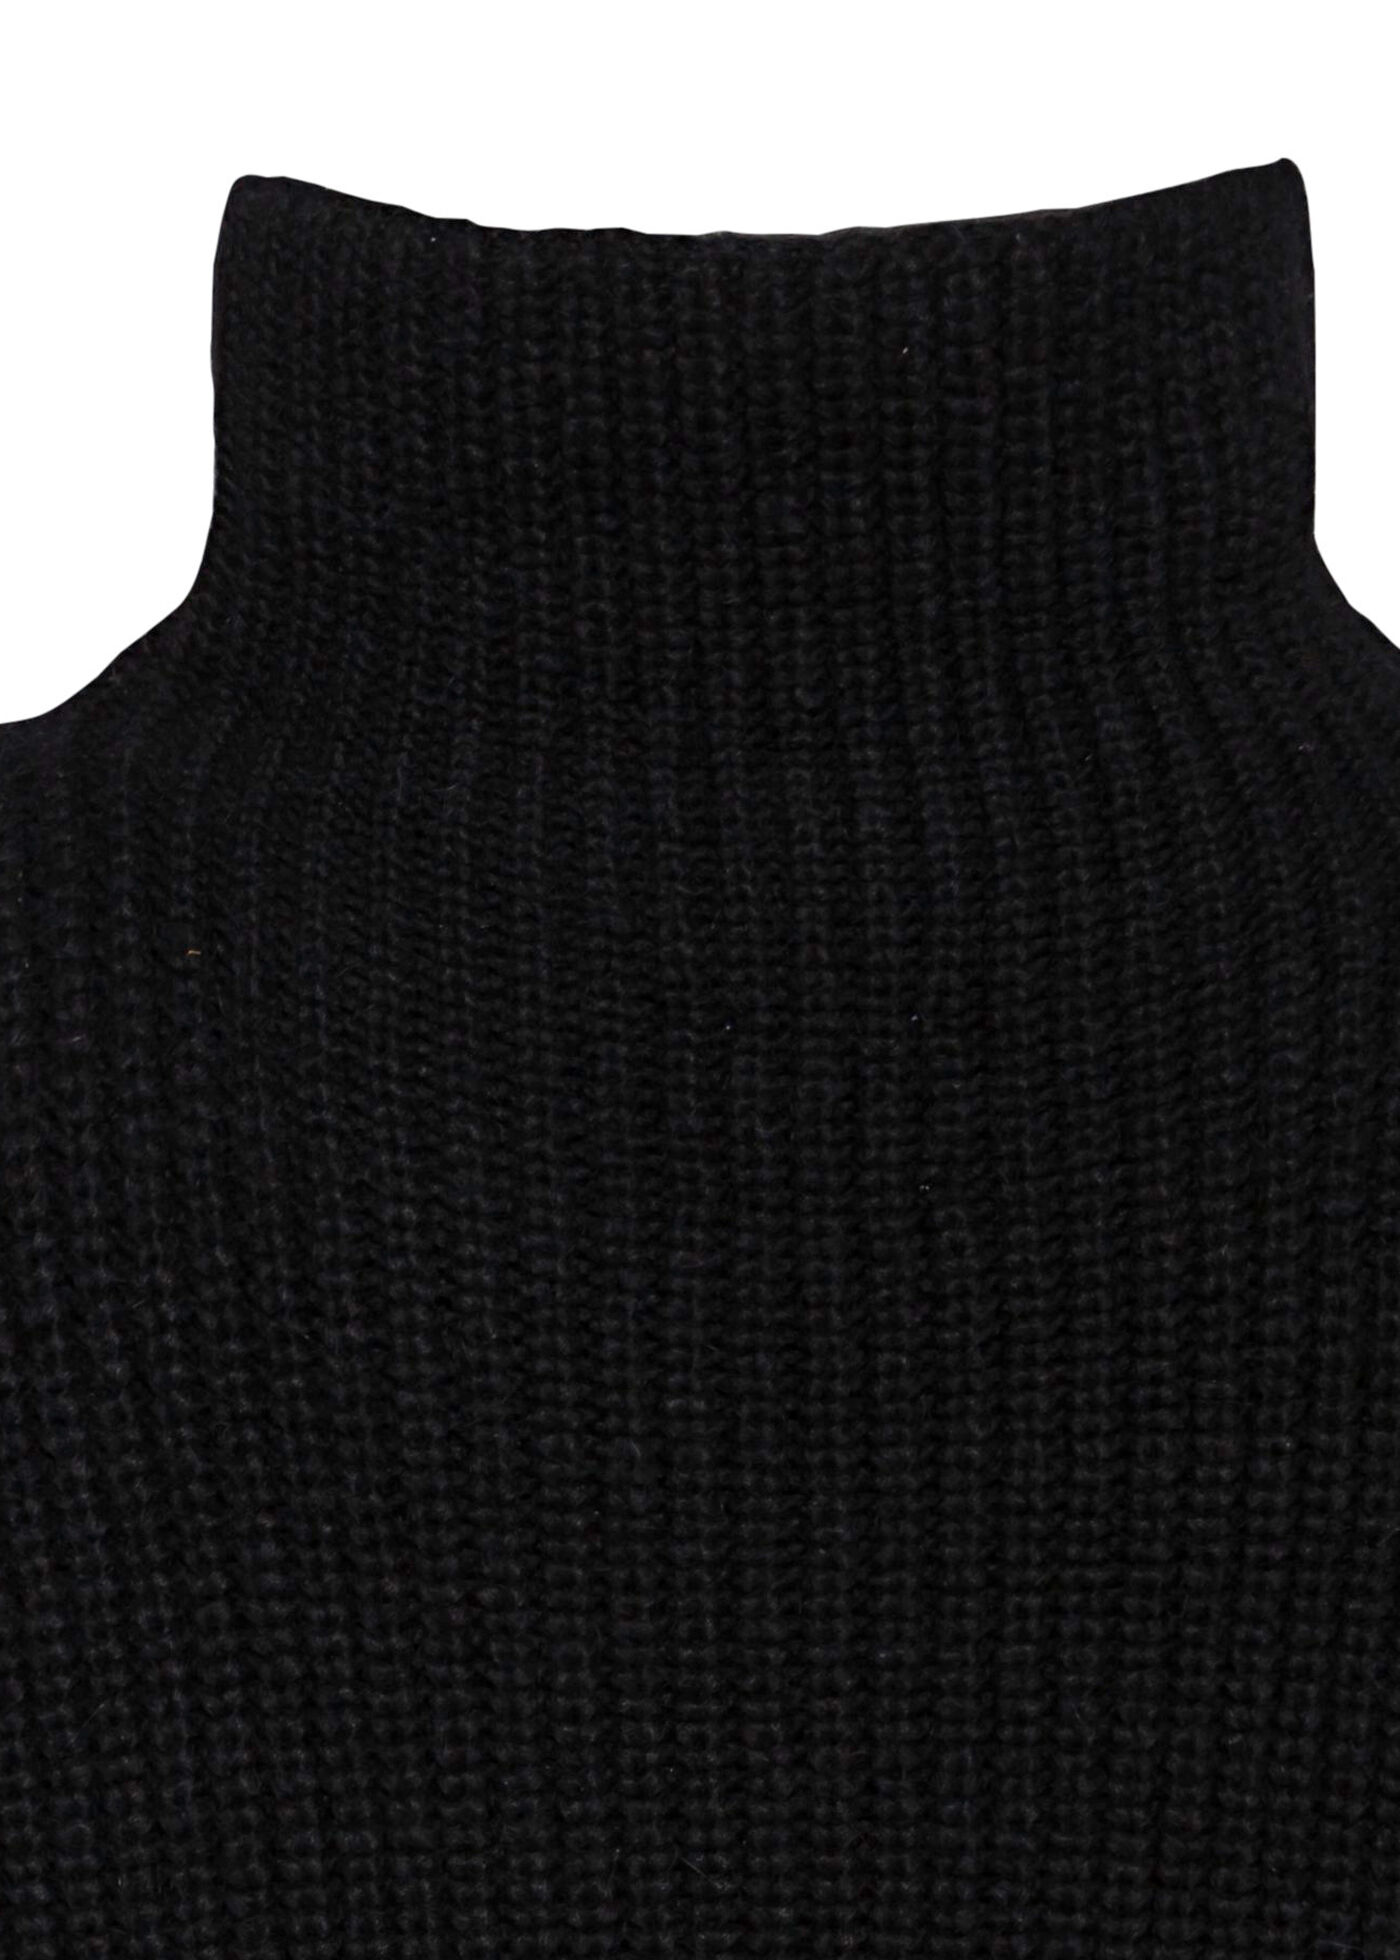 ANINE BING - SYDNEY SWEATER - BLACK - Pullover | KaDeWe Onlineshop